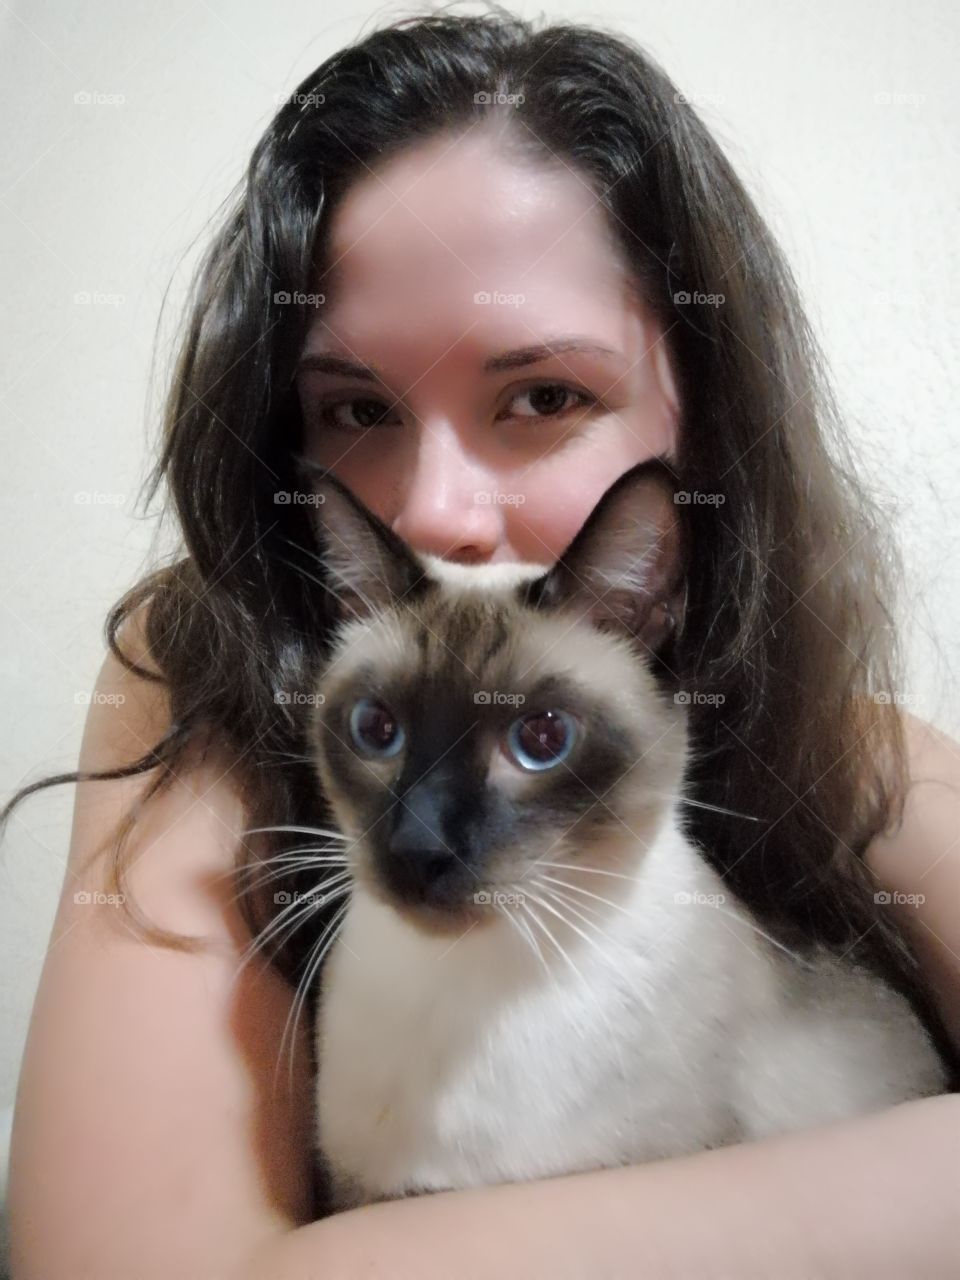 Selfie with my cat